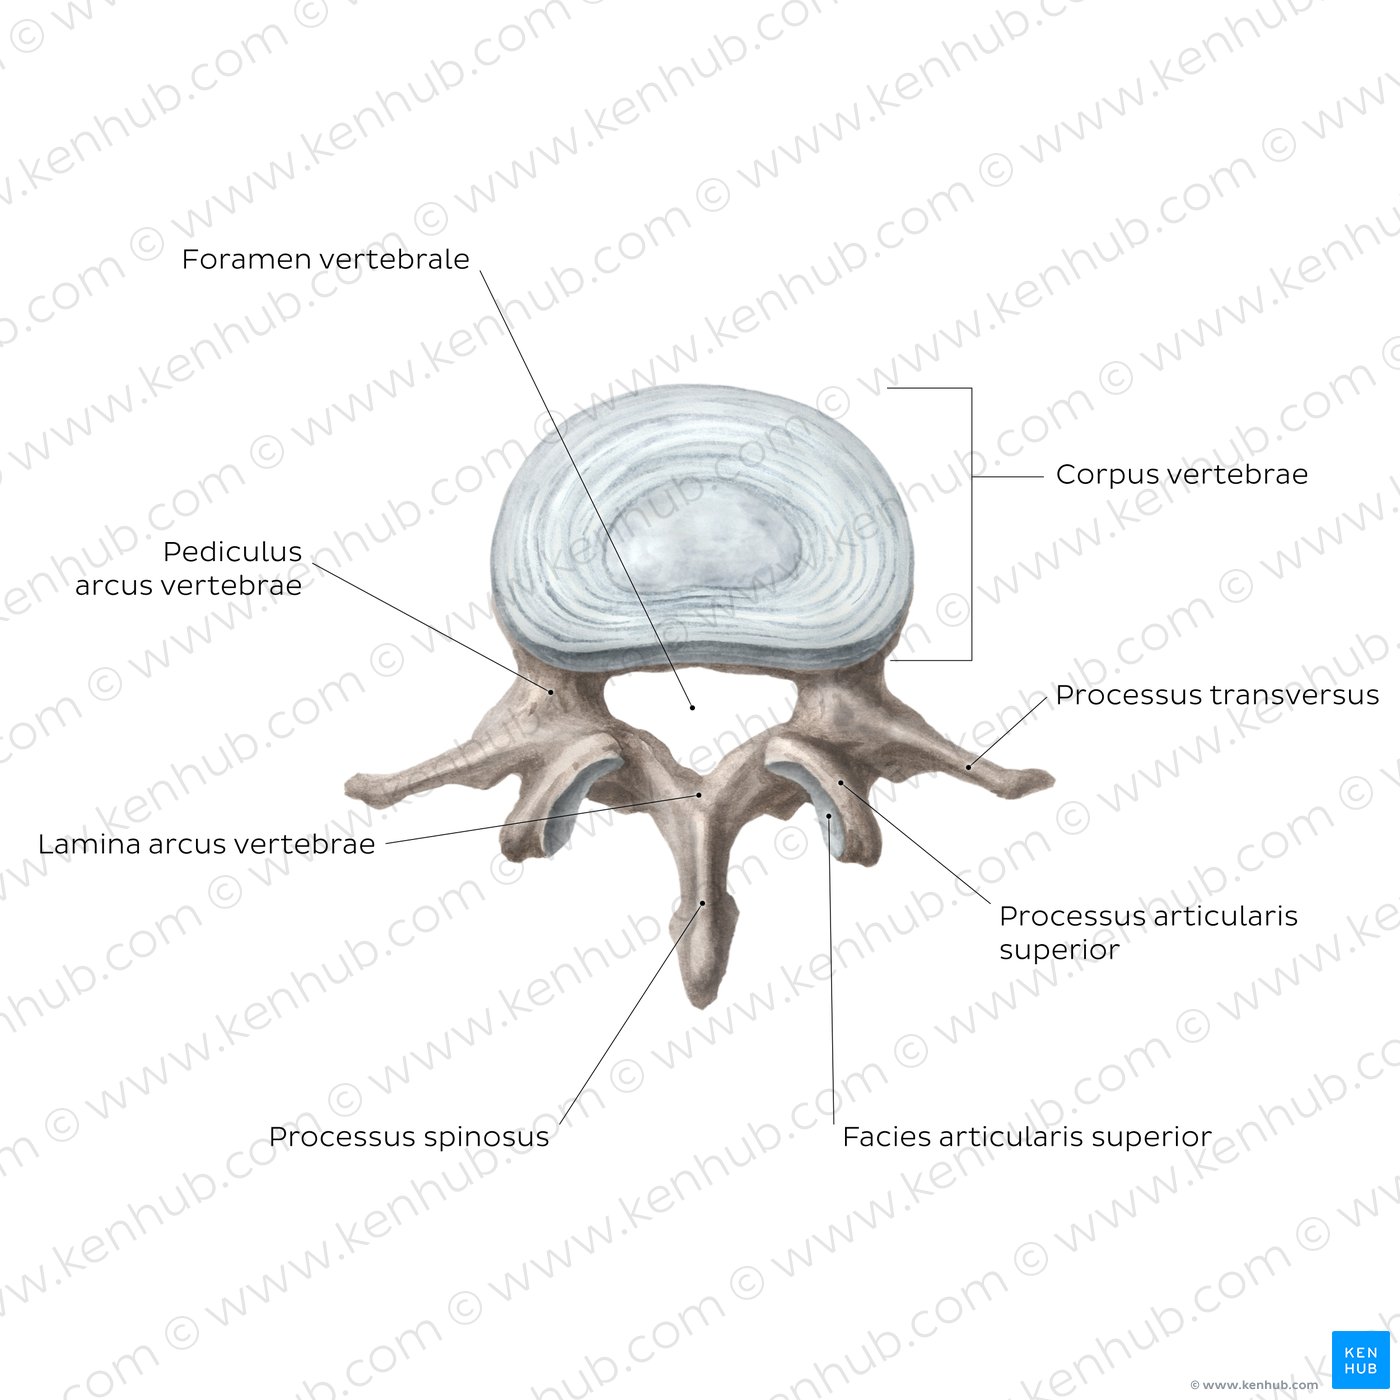 Anatomy of a typical vertebra lumbalis (diagram)